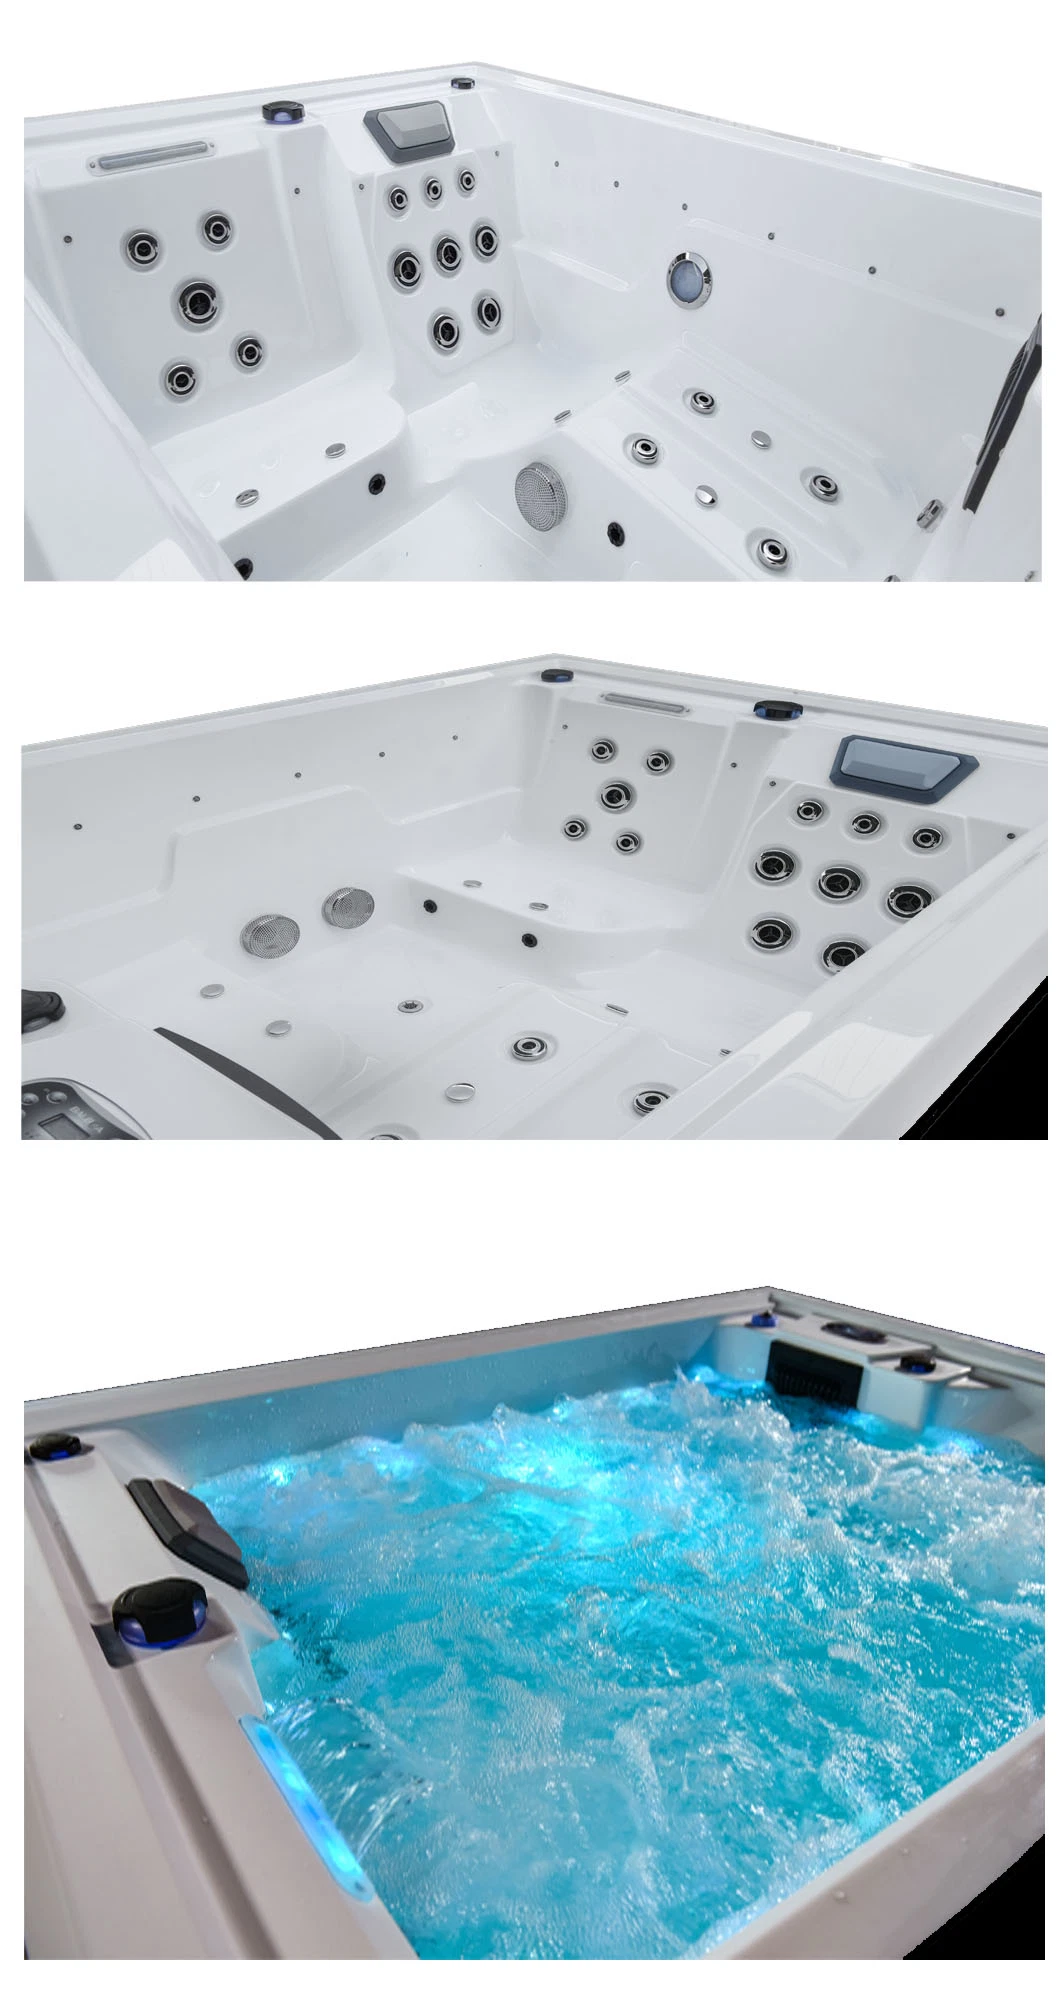 Balboa Massage SPA Luxury Indoor New Cabinet Design Whirlpool Hot Tub with Aifeel